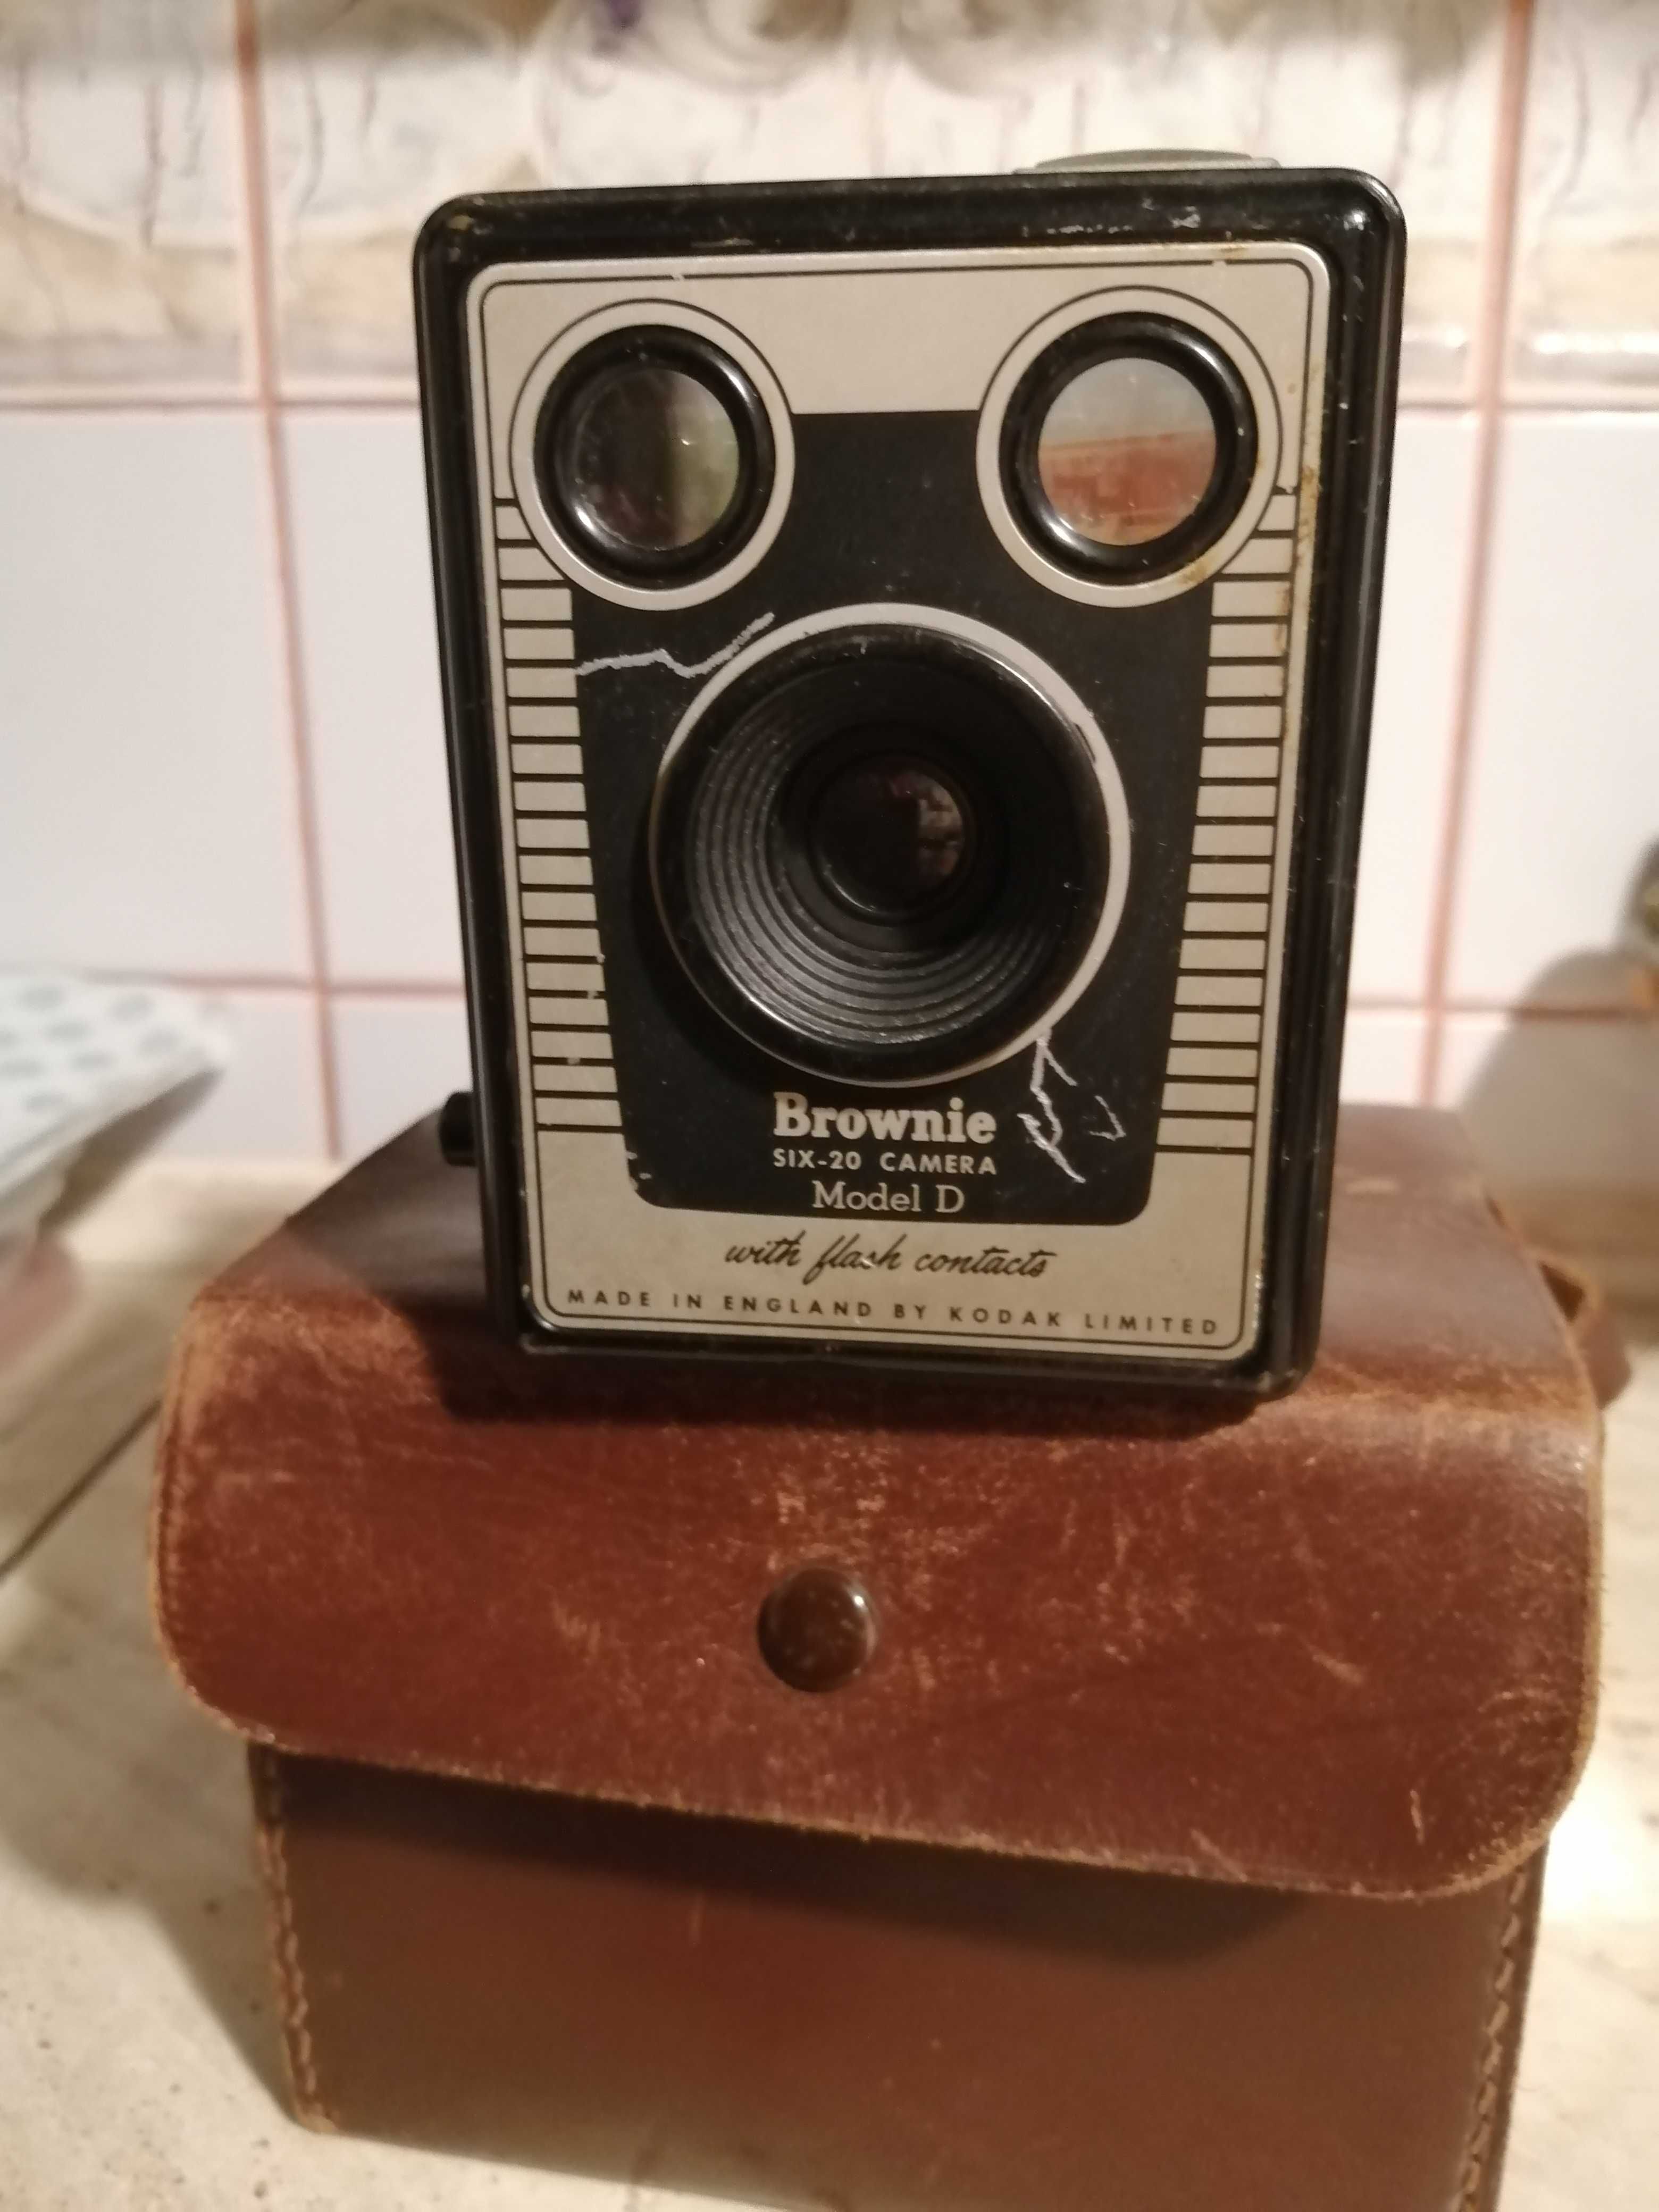 Aparat BROWNIE six camera model D /England Kodac